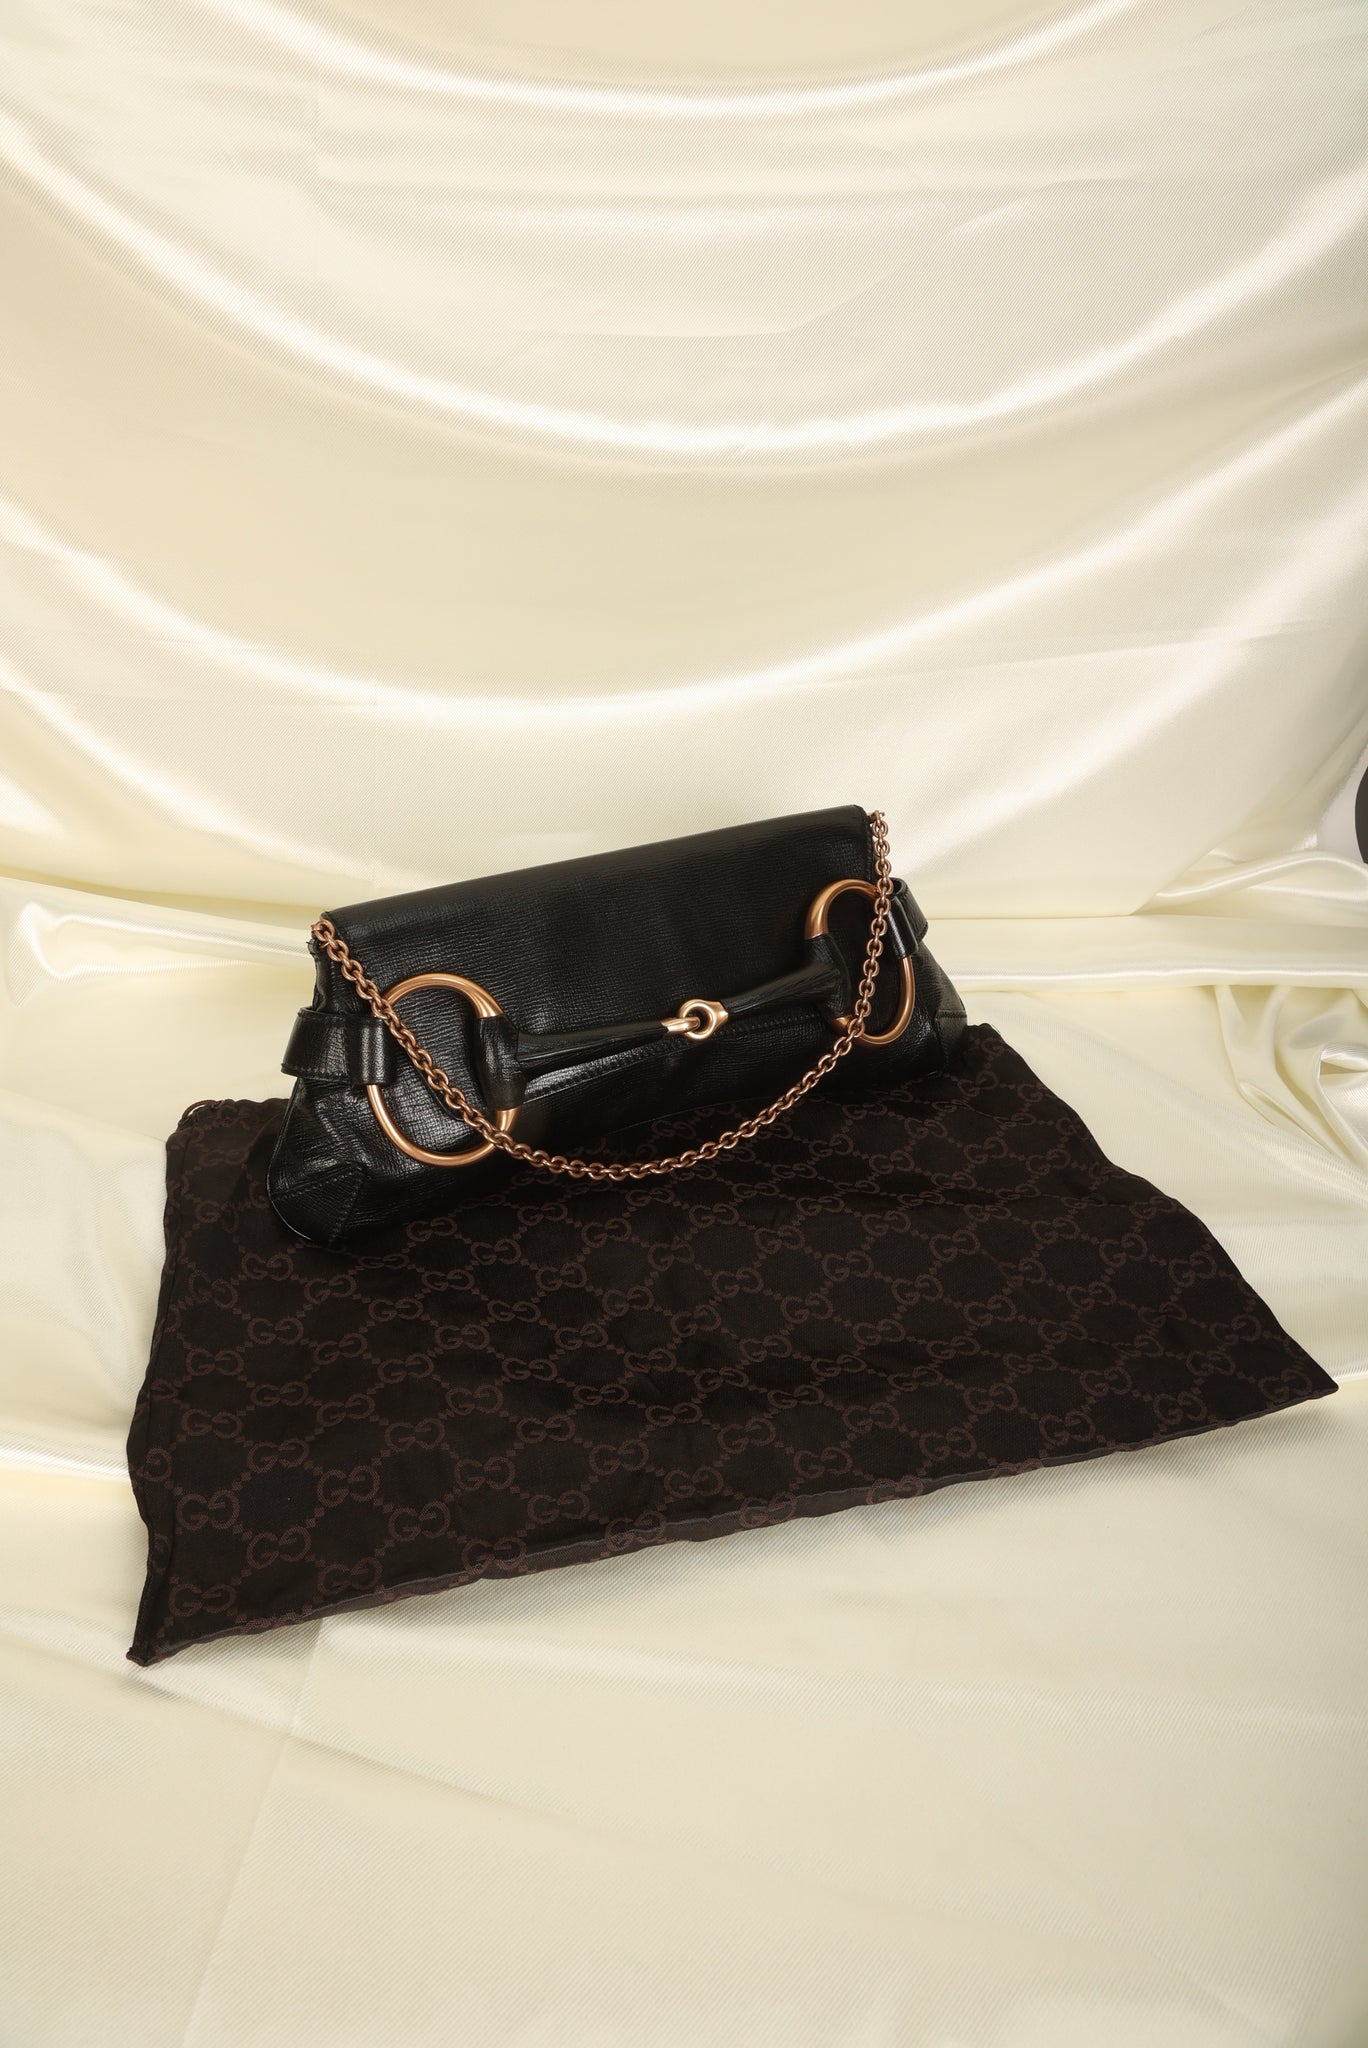 Gucci Horsebit Leather Shoulder Bag